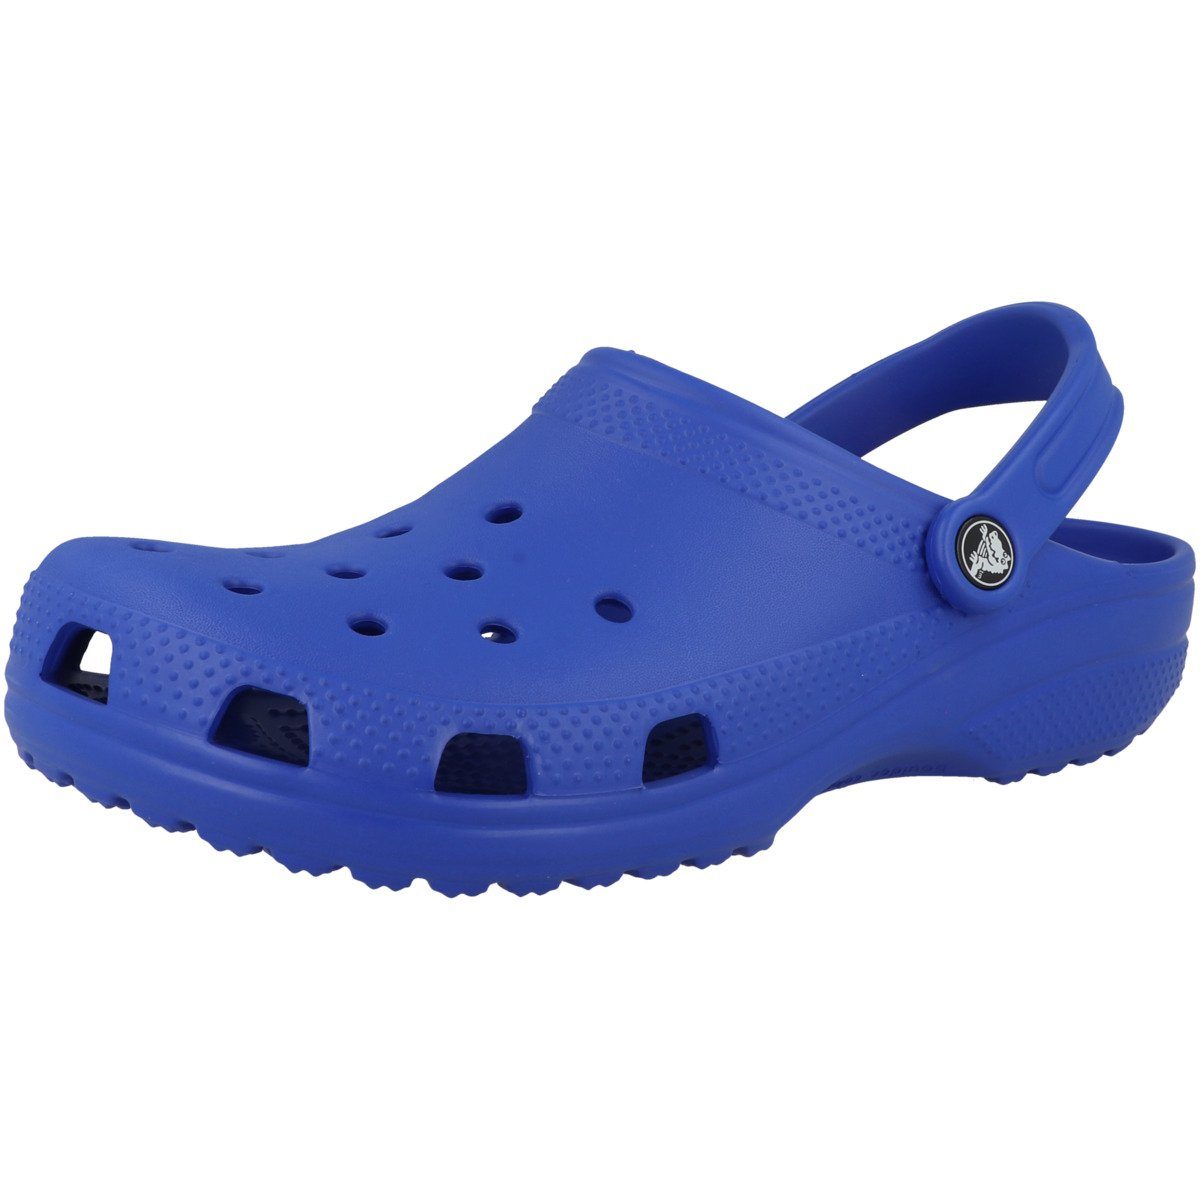 Erwachsene keine Merkmale besonderen Classic Clog Unisex blau Crocs